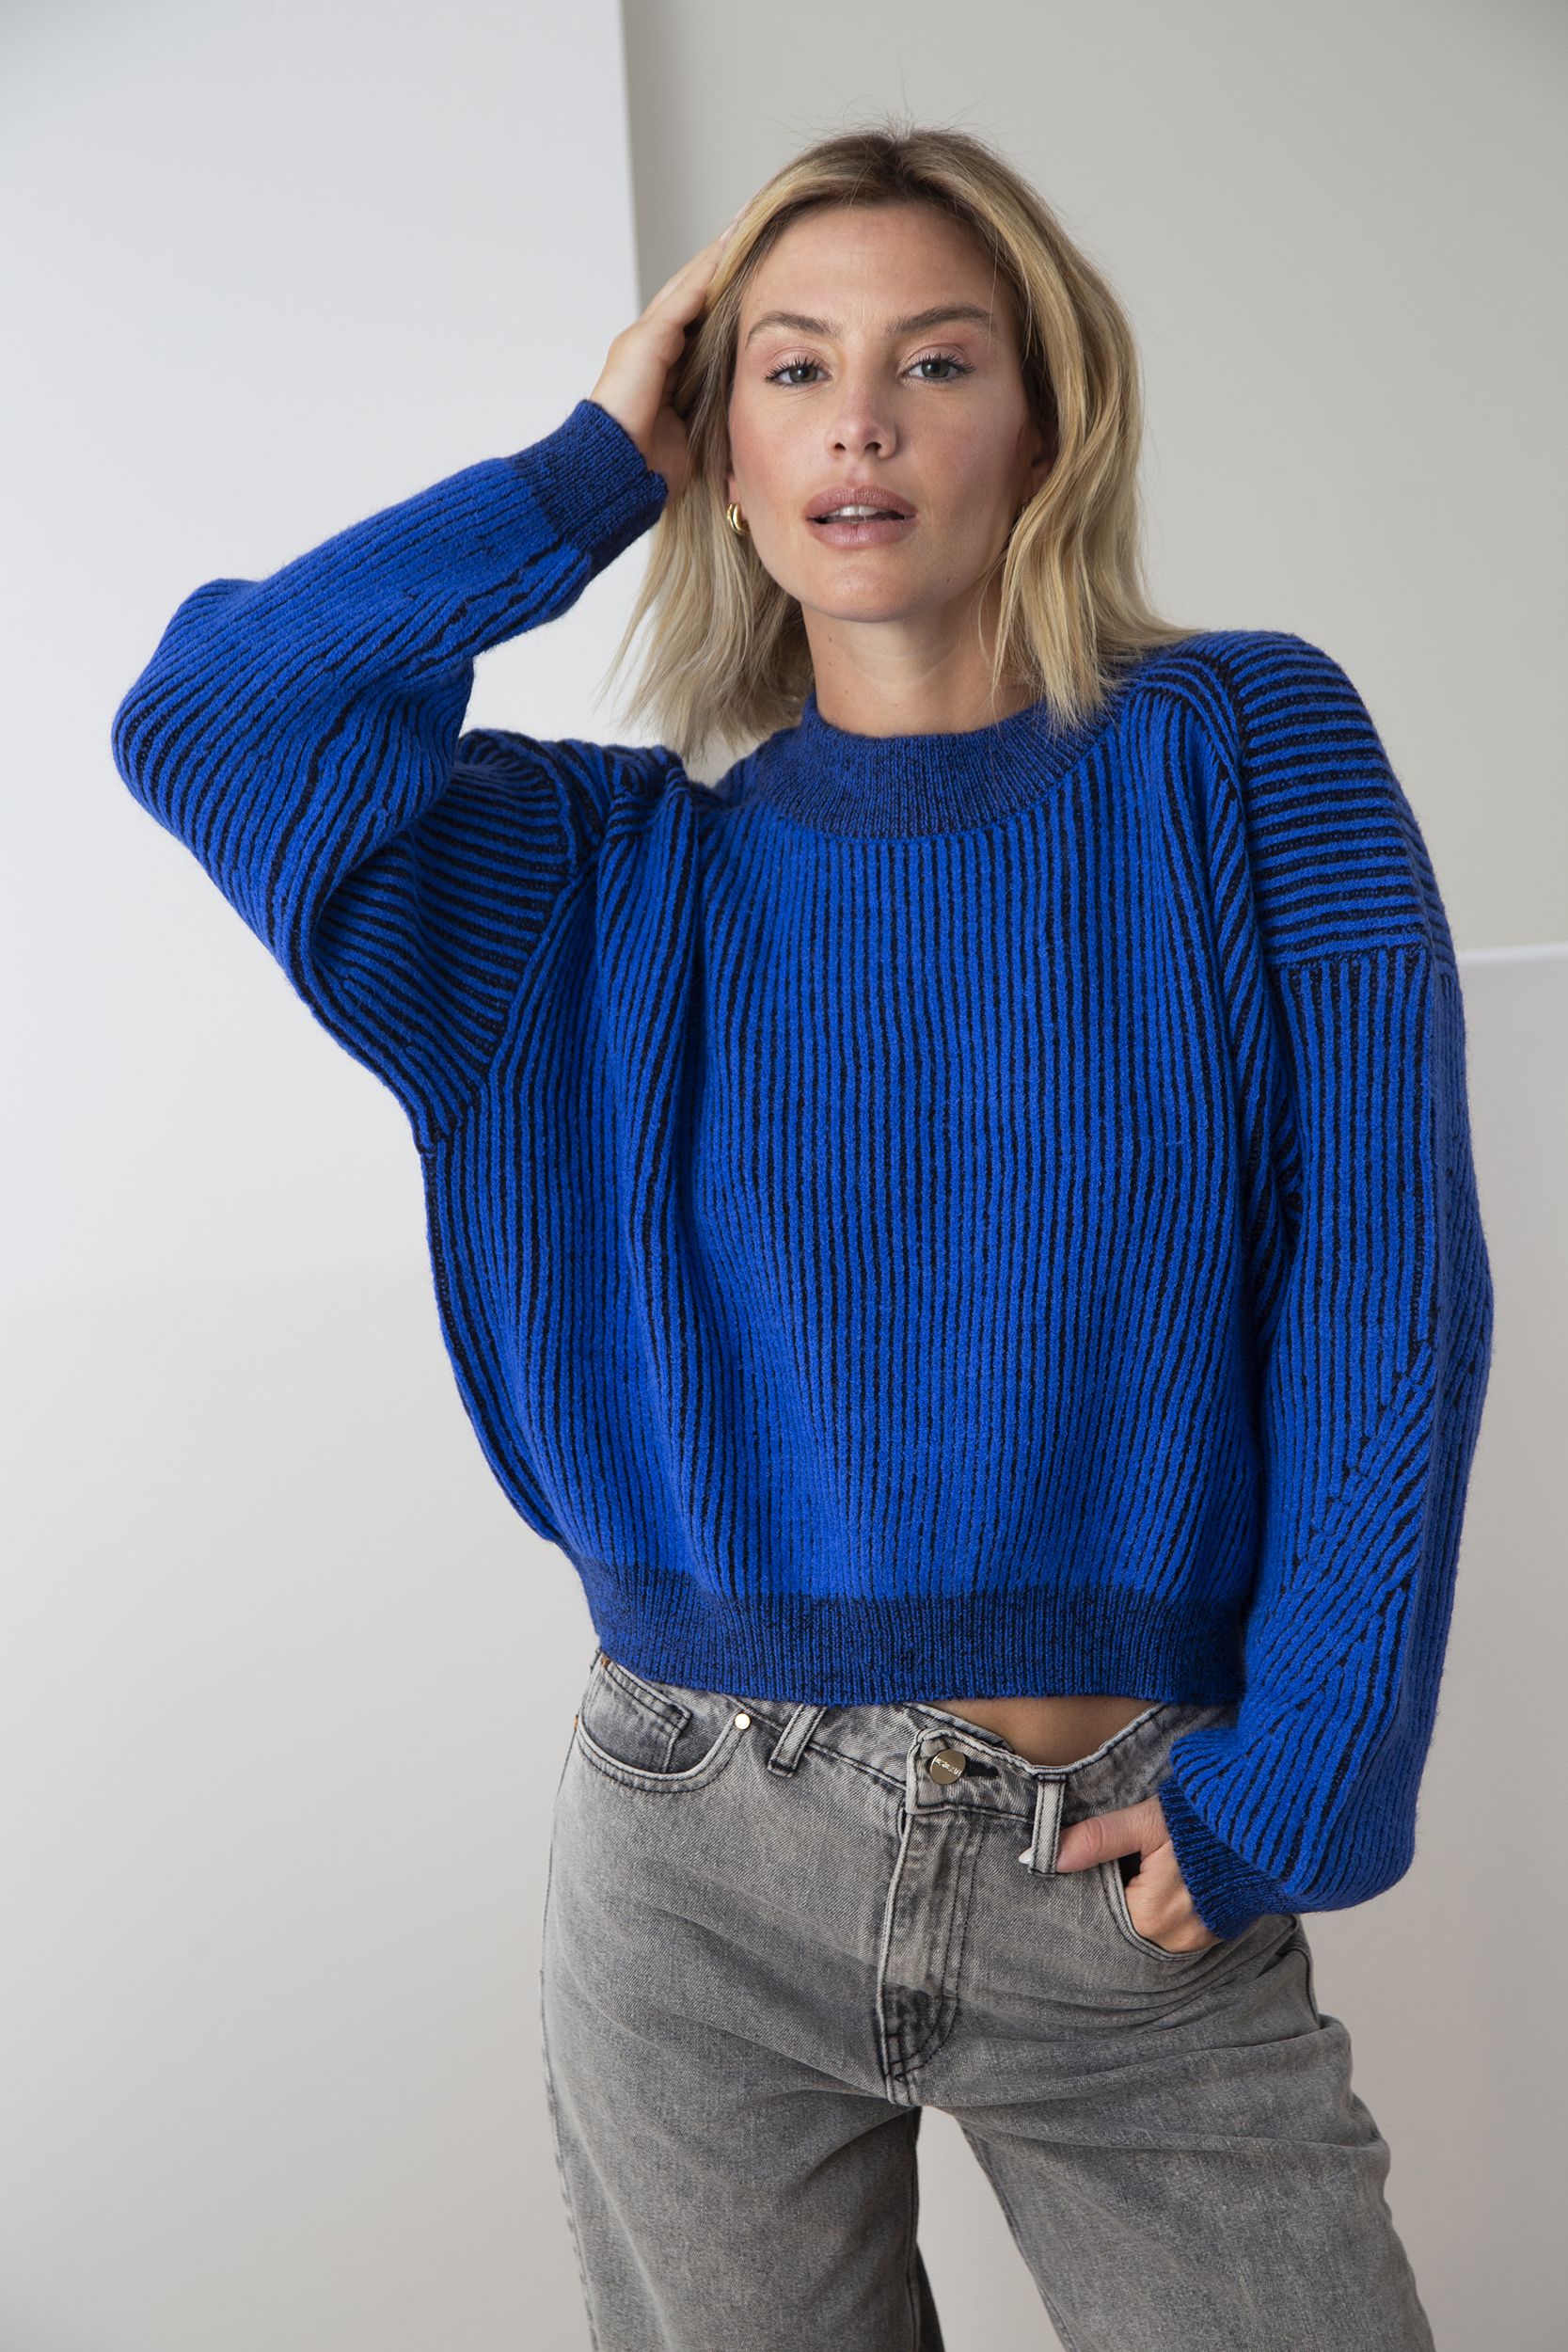 759-sweater-alma-blue-3.jpg